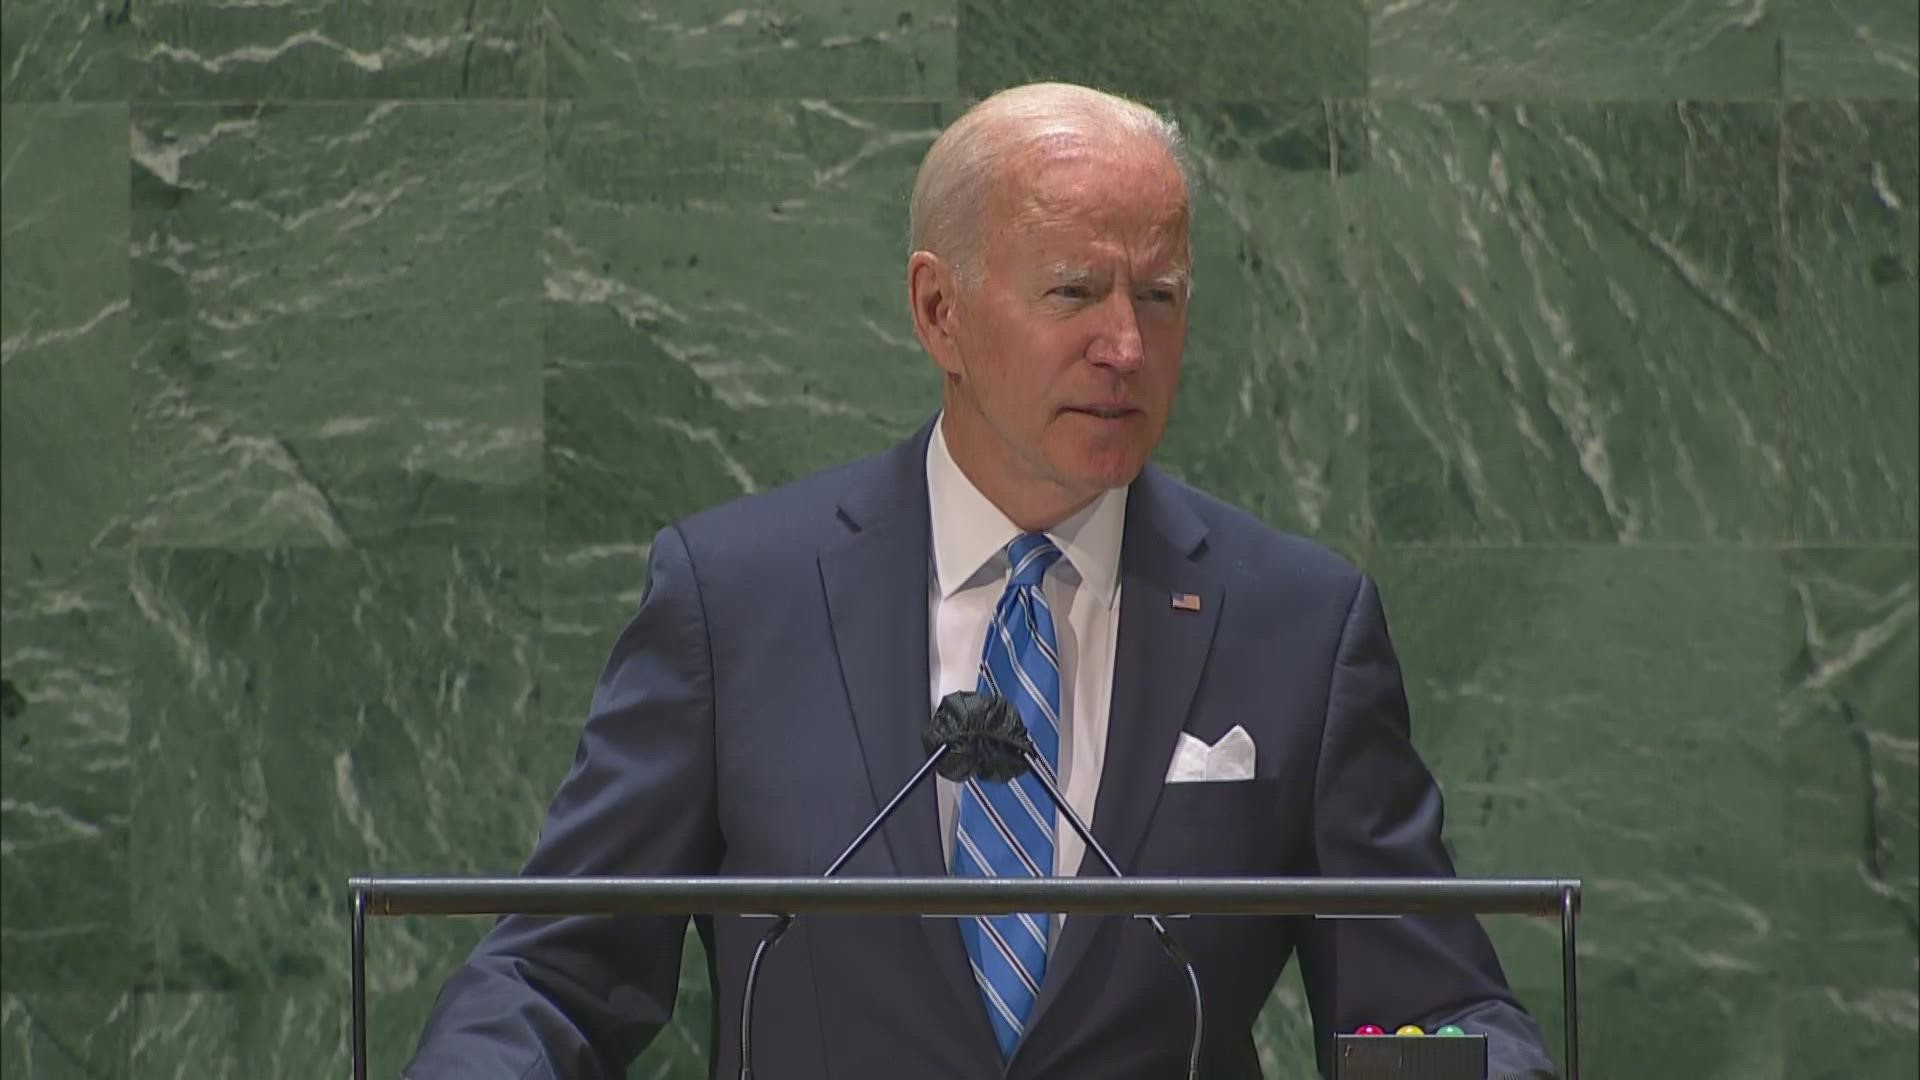 Amid growing China tensions, Biden tells UN that US is 'not seeking a new Cold War.'